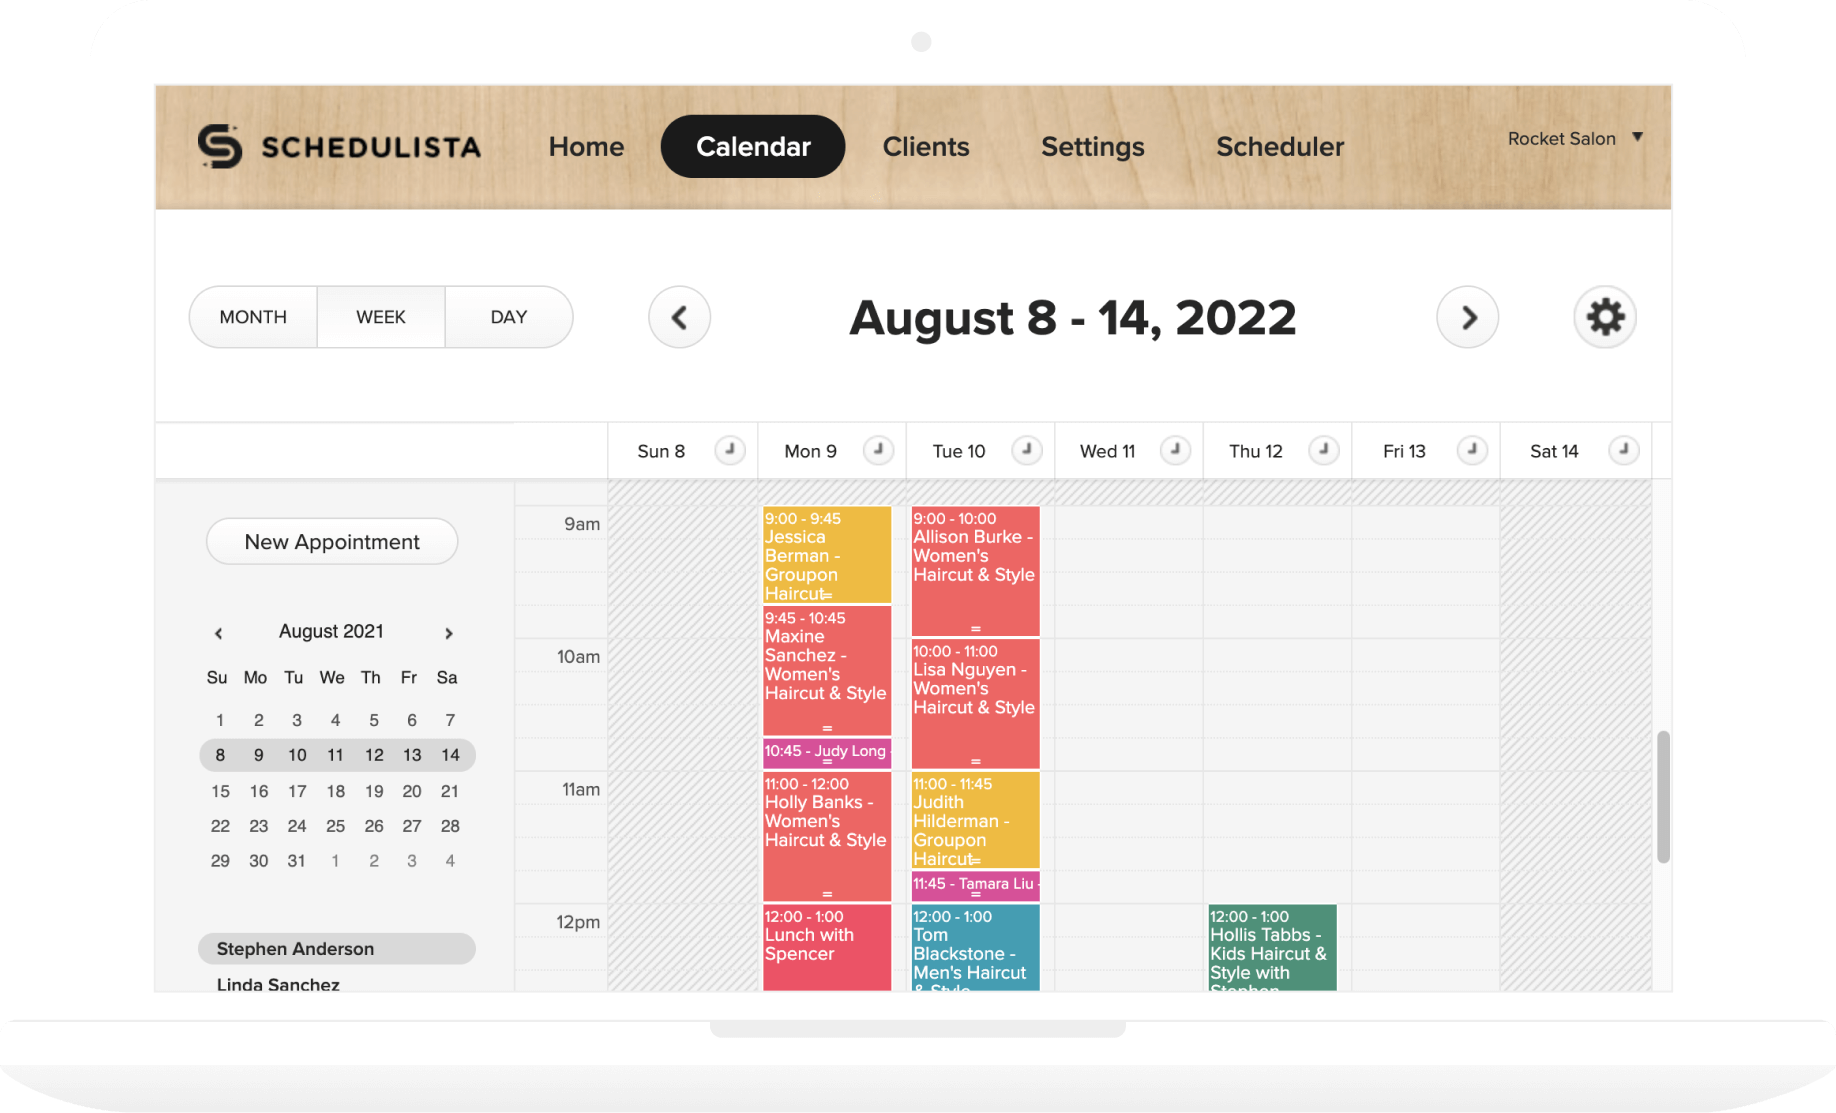 Schedulista scheduling app with appointment calendar shown on desktop computer